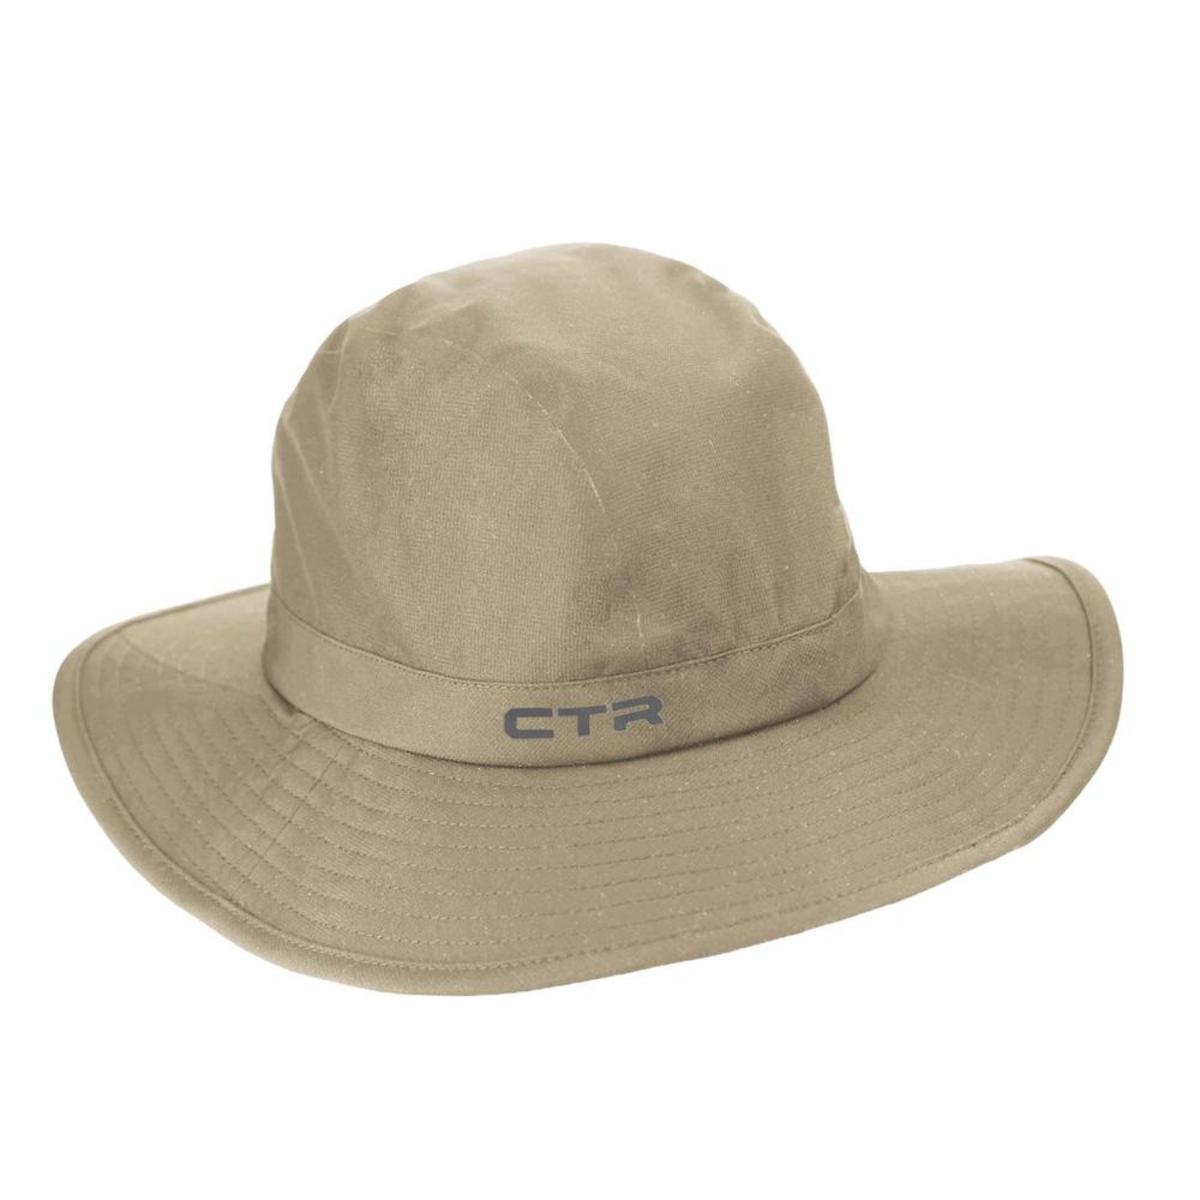 CTR by Chaos Stratus Typhoon Sombrero Hat